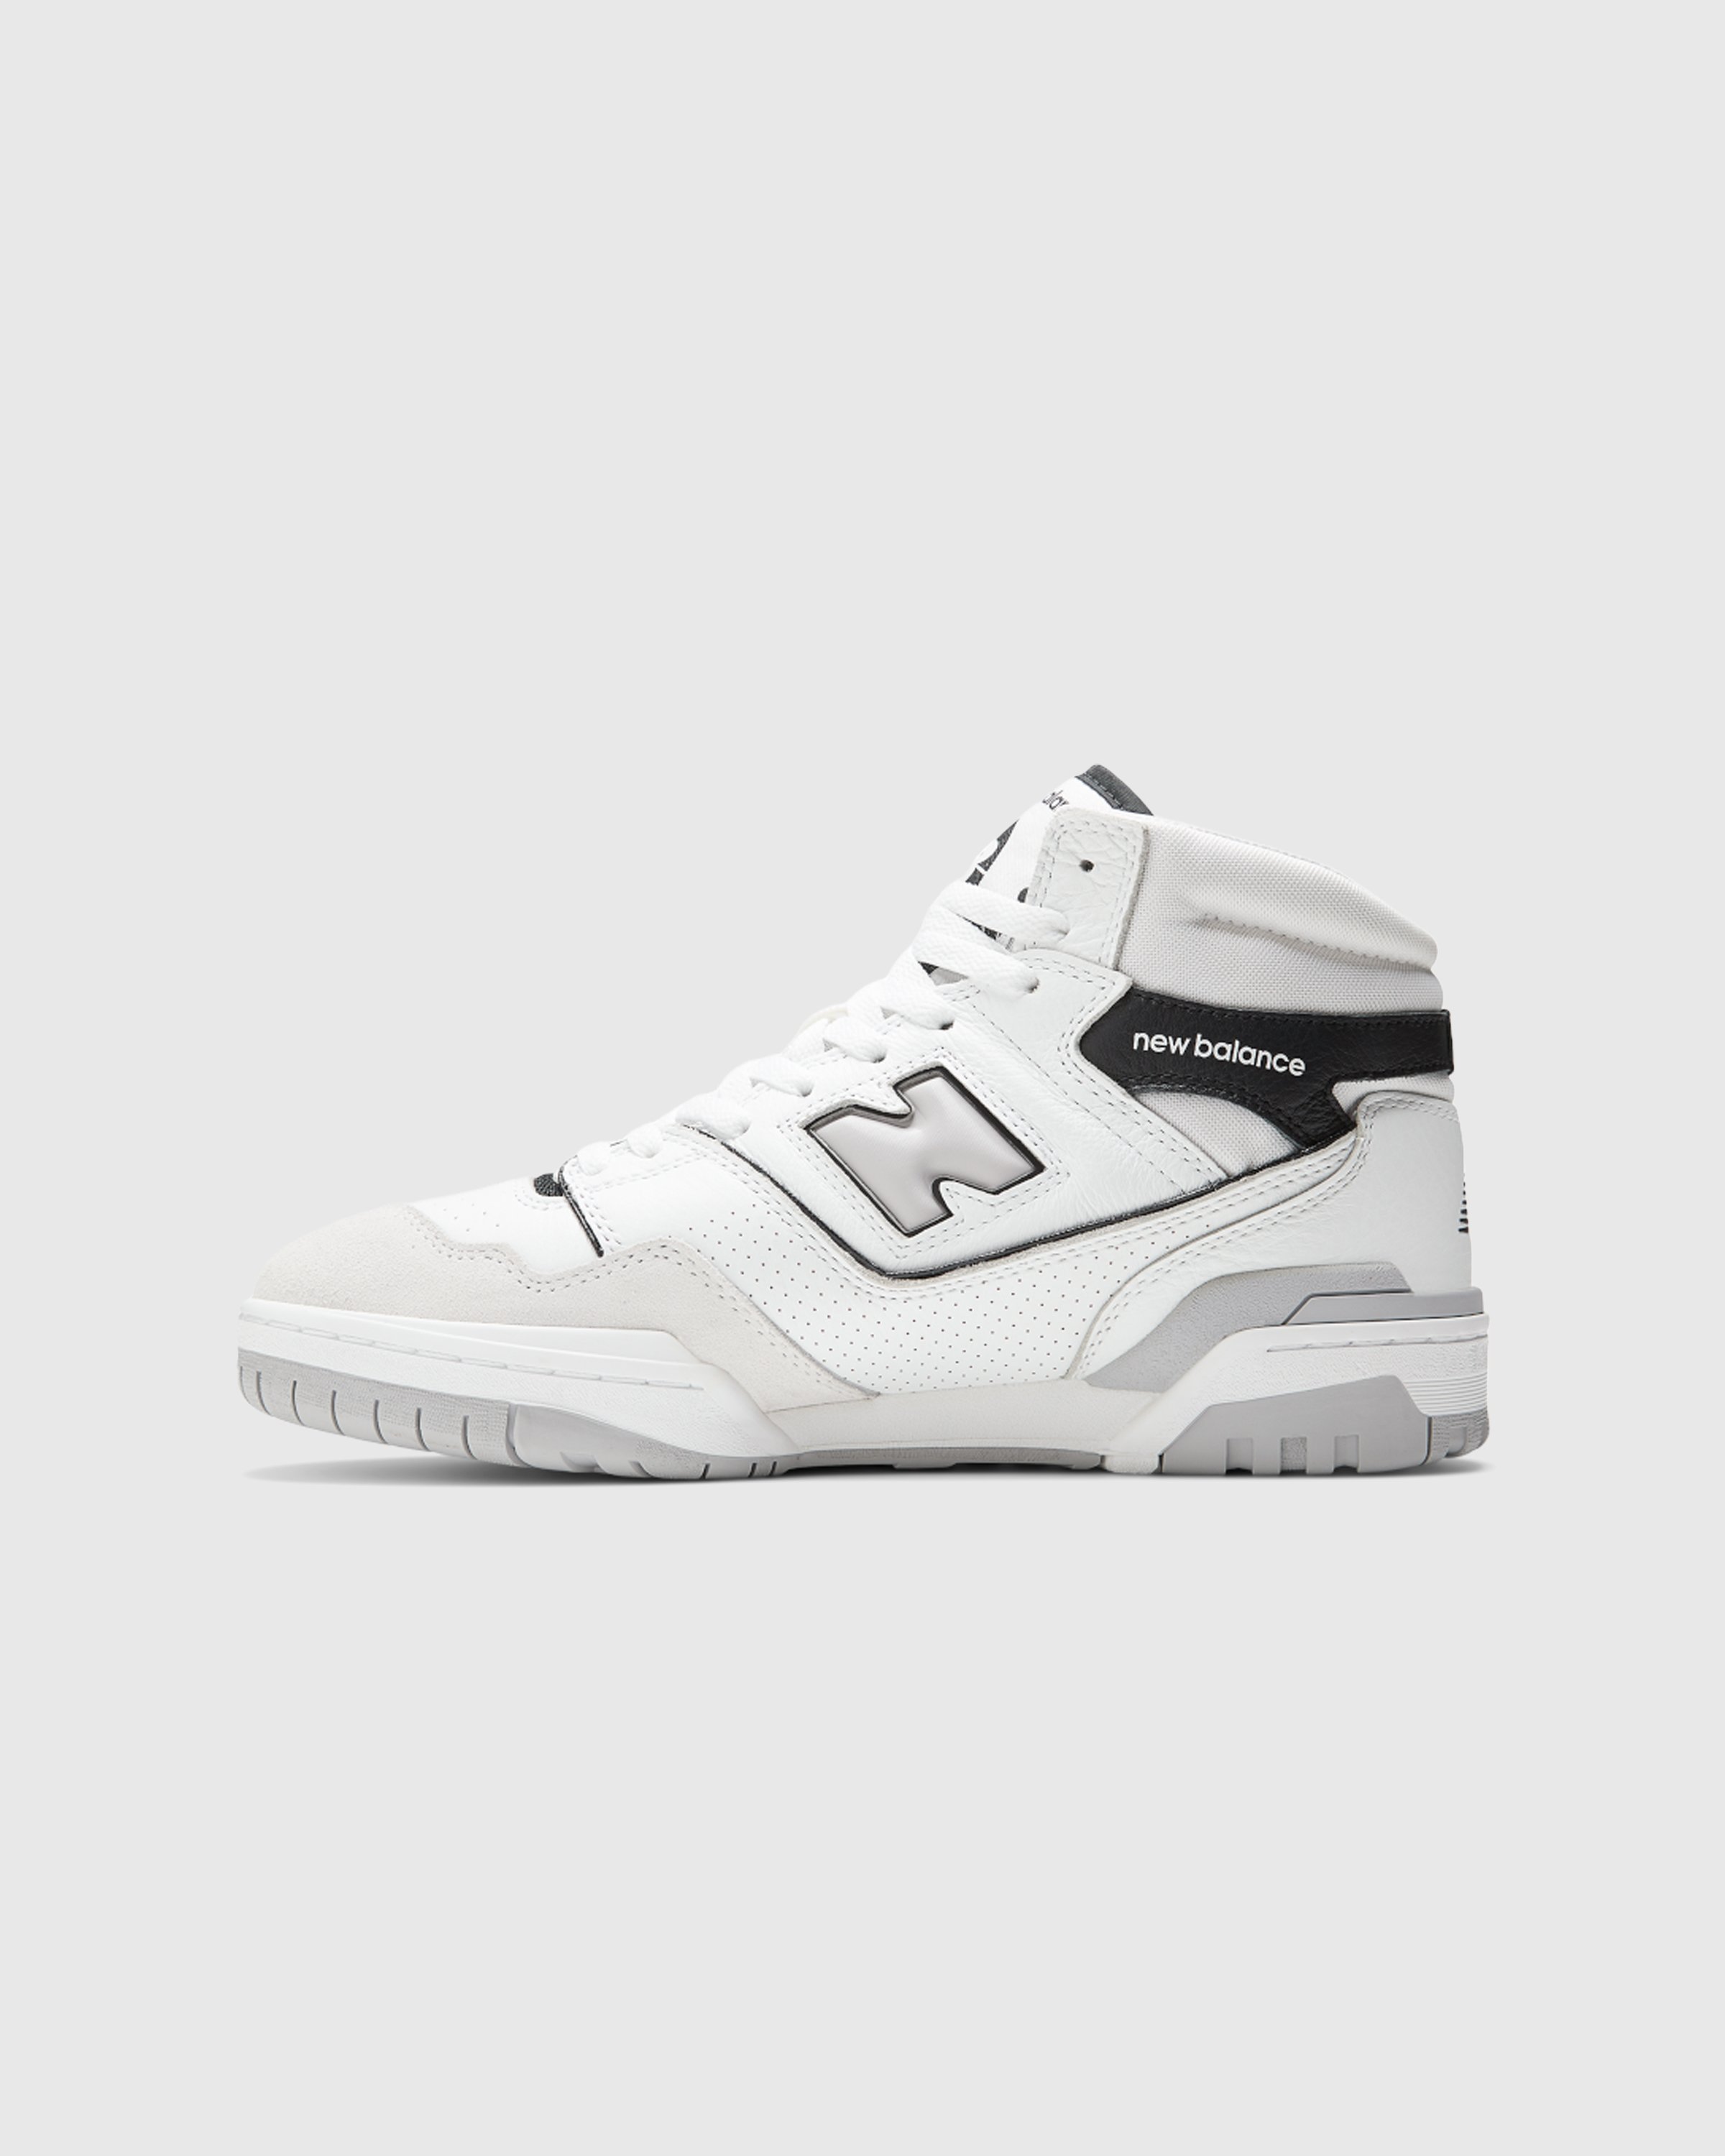 New Balance - BB 650 RWH White - Footwear - White - Image 2